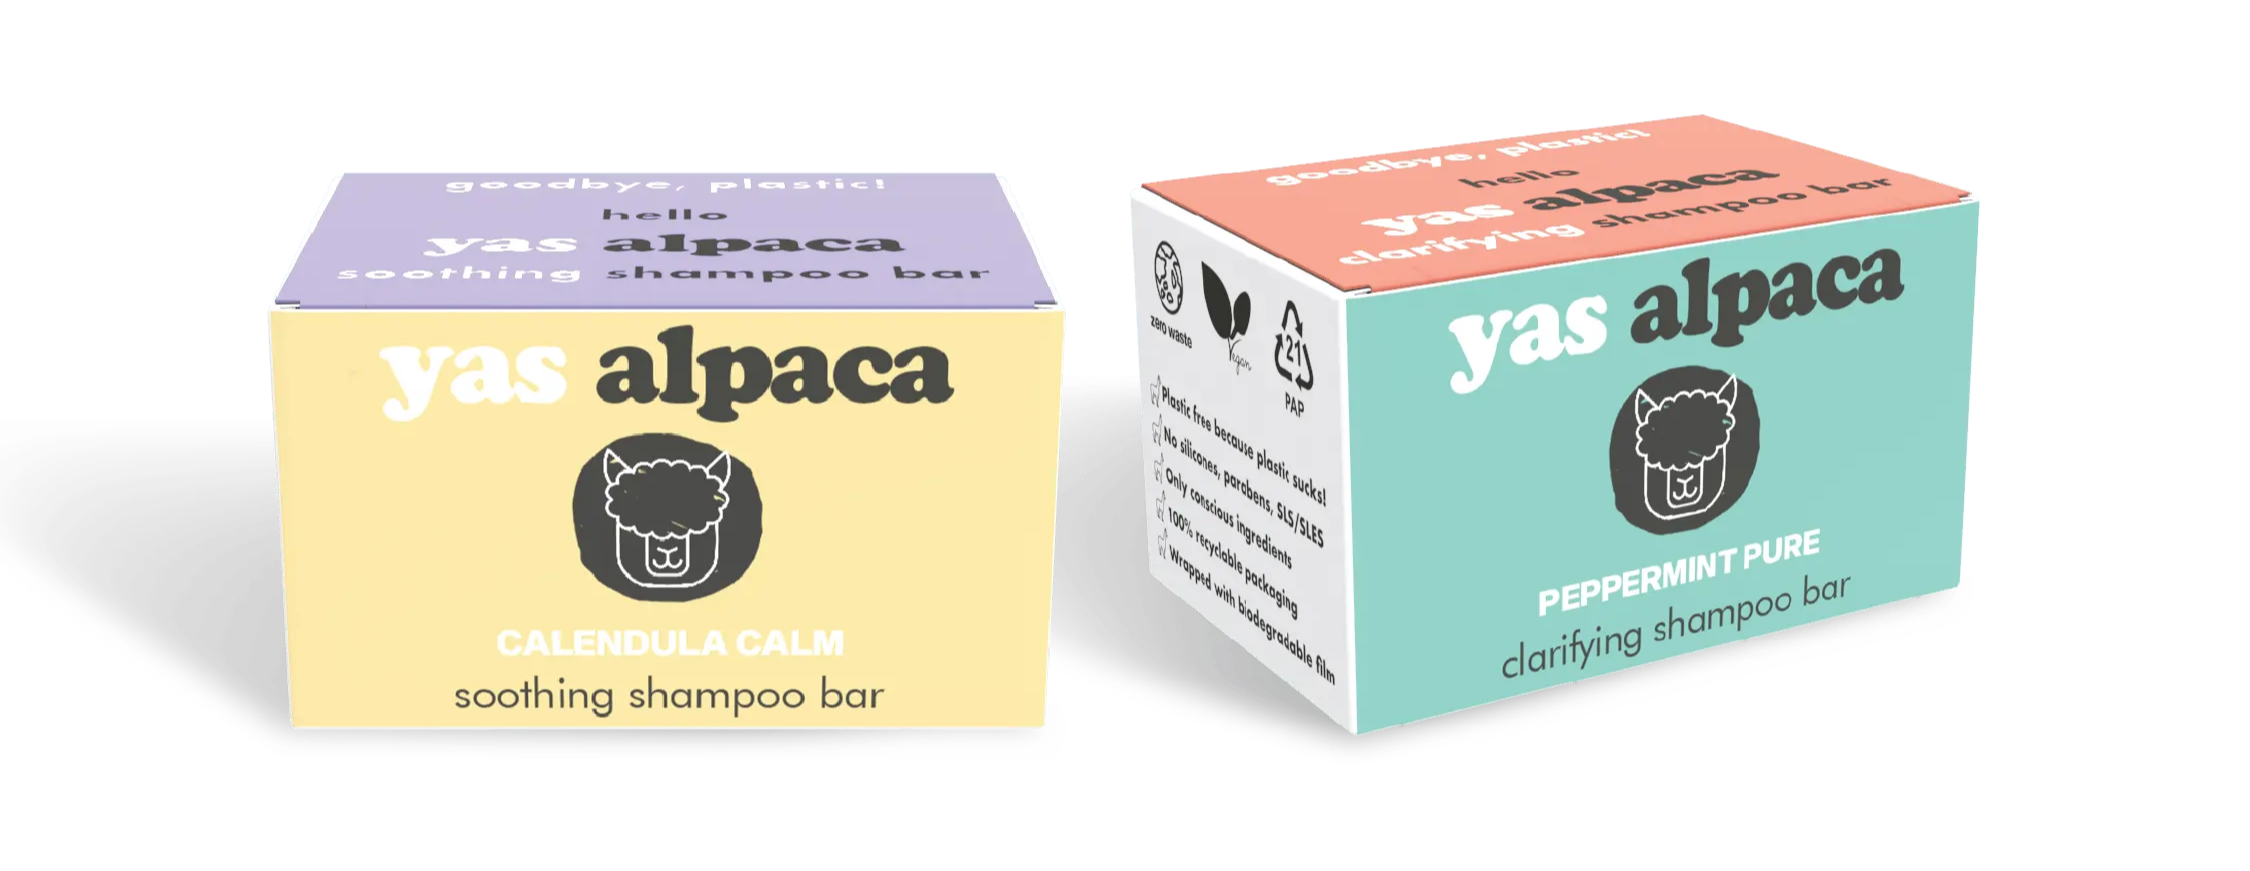 Packaging boxes of Yas Alpaca's Calendula Calm soothing shampoo bar and Peppermint Pure clarifying shampoo bar. 